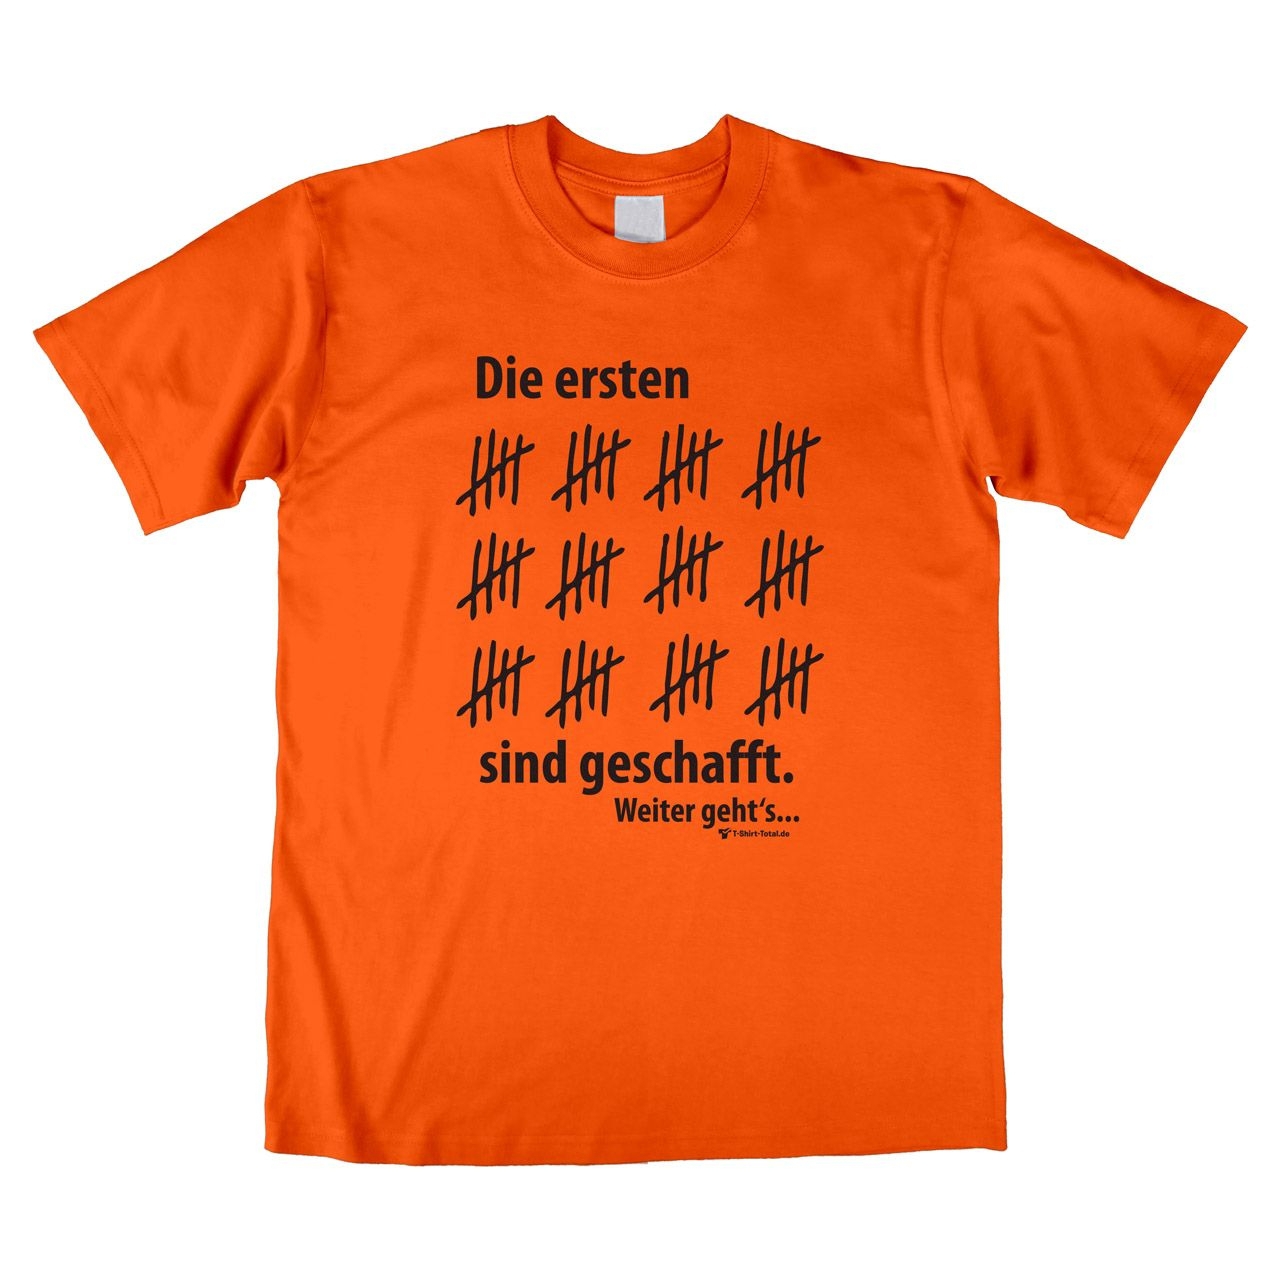 Ersten 60 geschafft Unisex T-Shirt orange 2-Extra Large